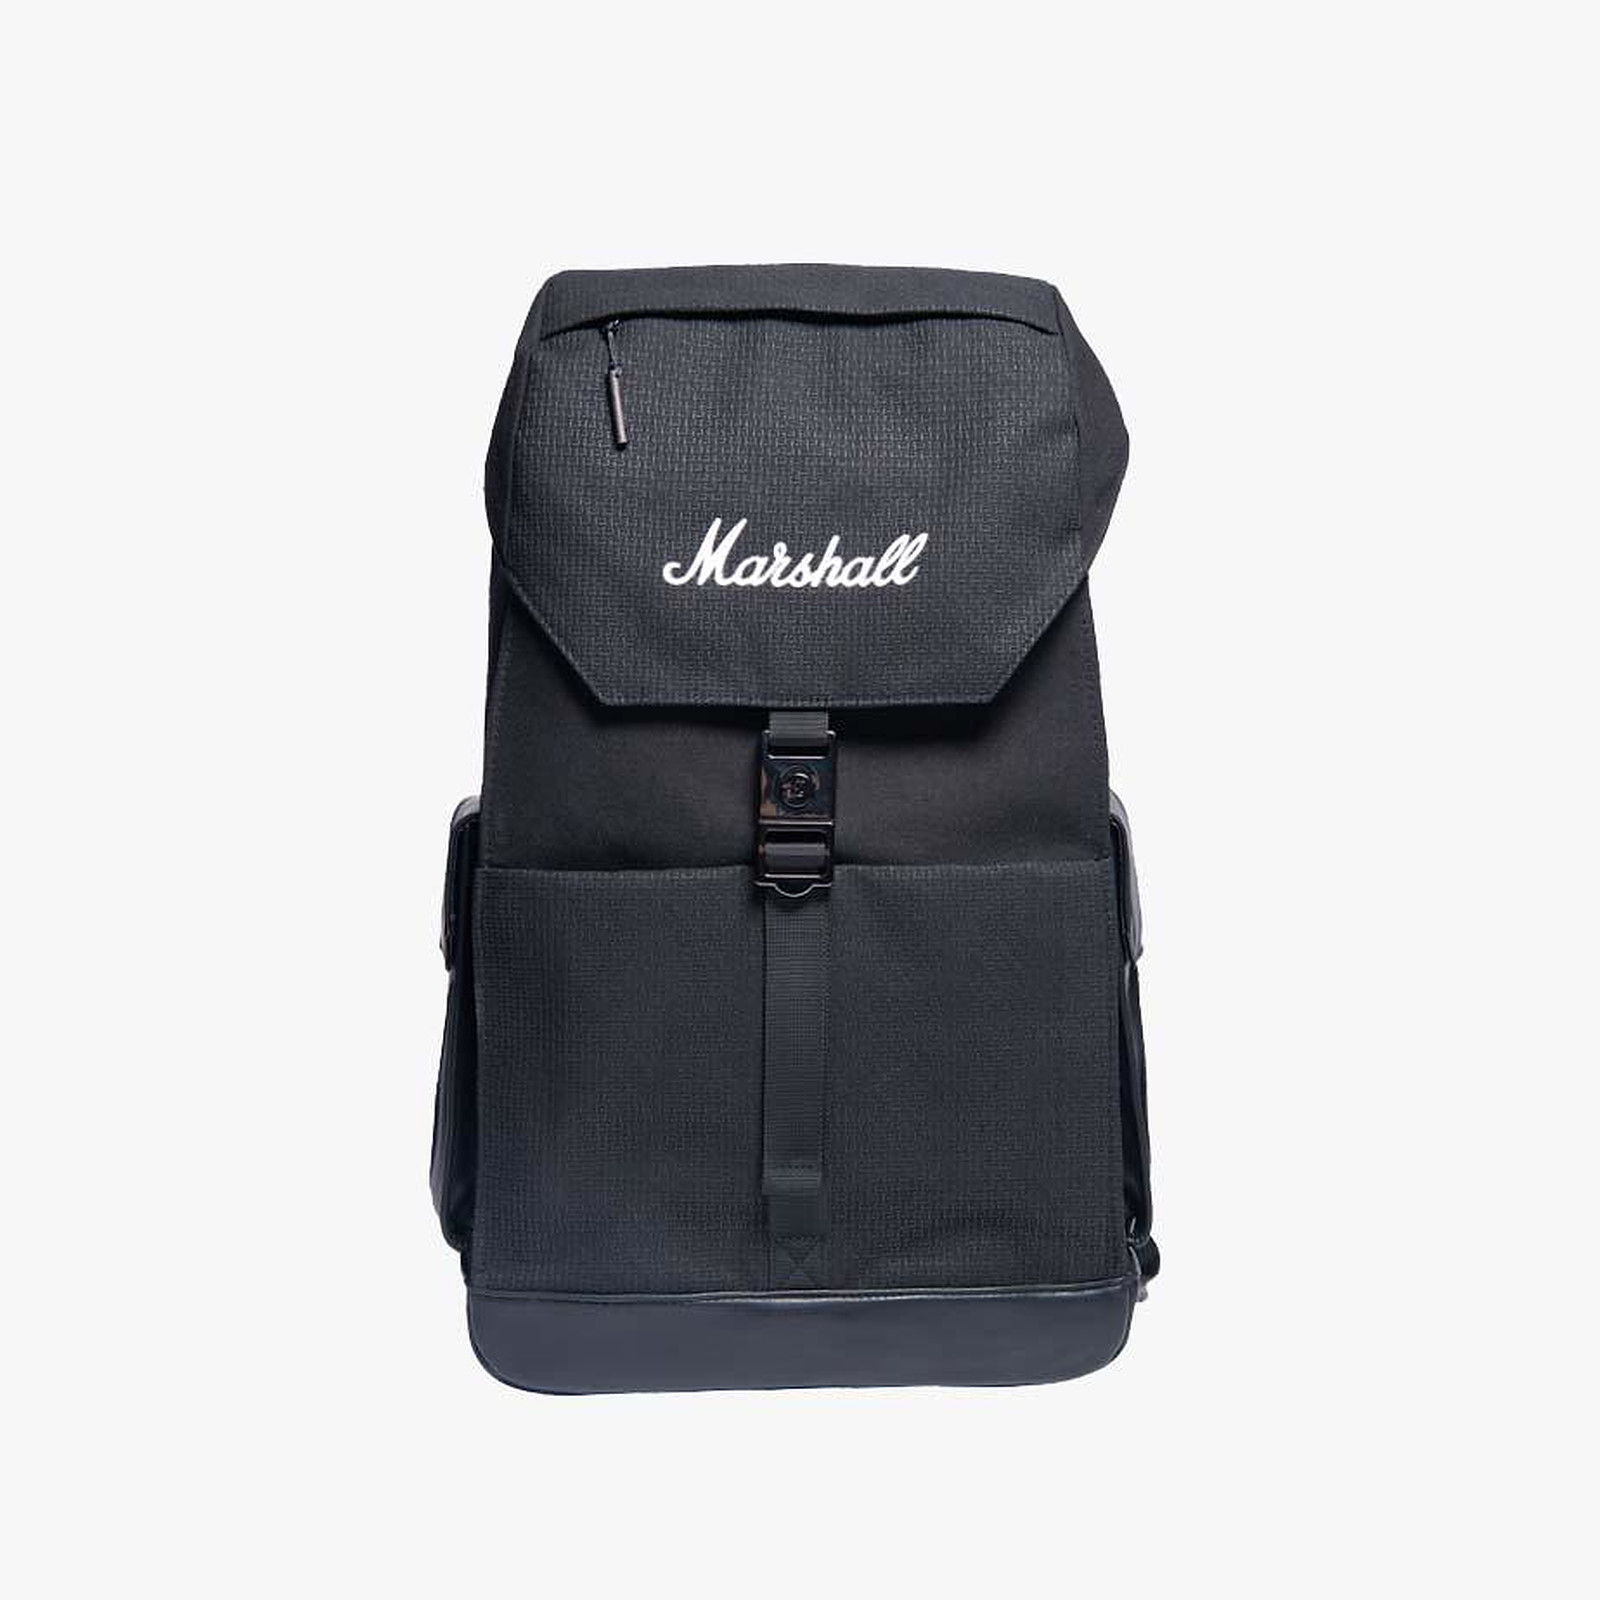 Marshall - Sac a  dos ruckstack - contenance 28 litres - noir et logo blanc - Sac, sacoche, housse MARSHALL